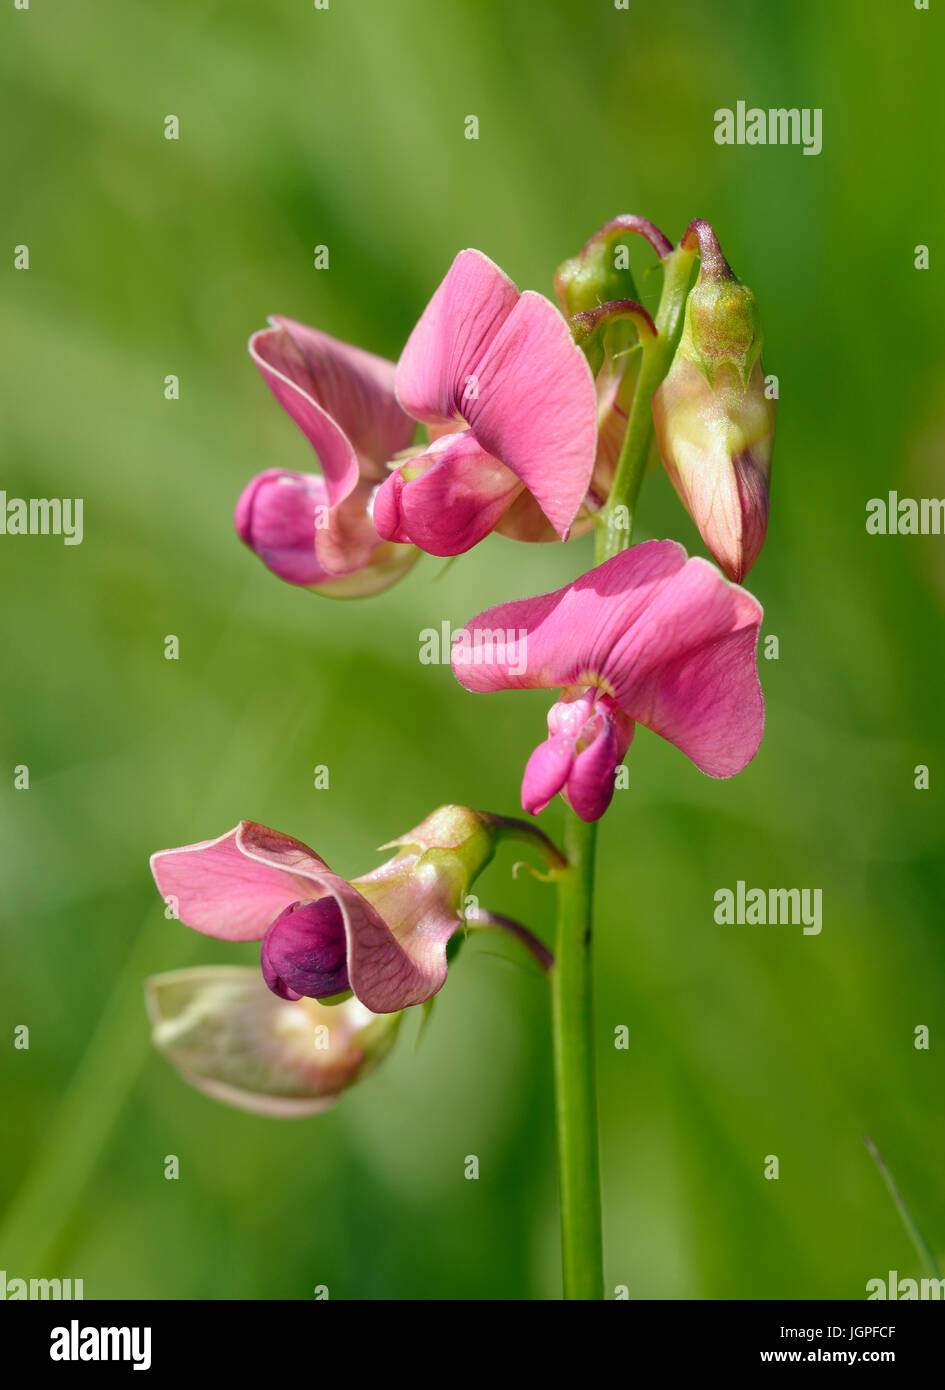 Broad-leaved Everlasting-pea - Lathyrus latifolius Pink Pea Flower Stock Photo